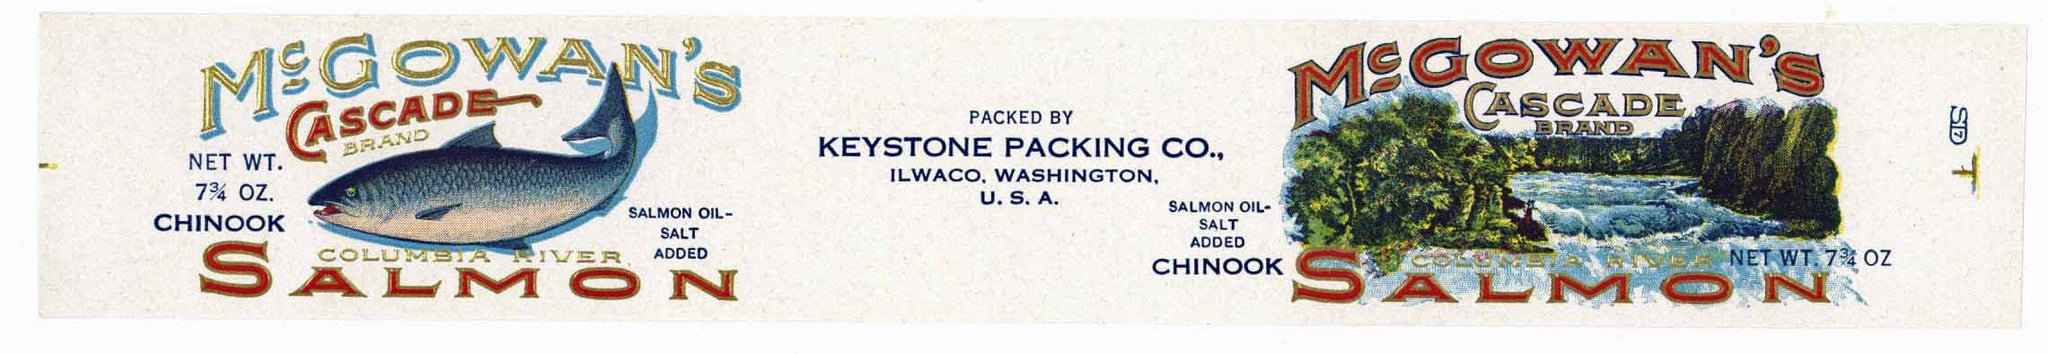 McGowan's Cascade Brand Vintage Ilwaco Washington Salmon Can Label